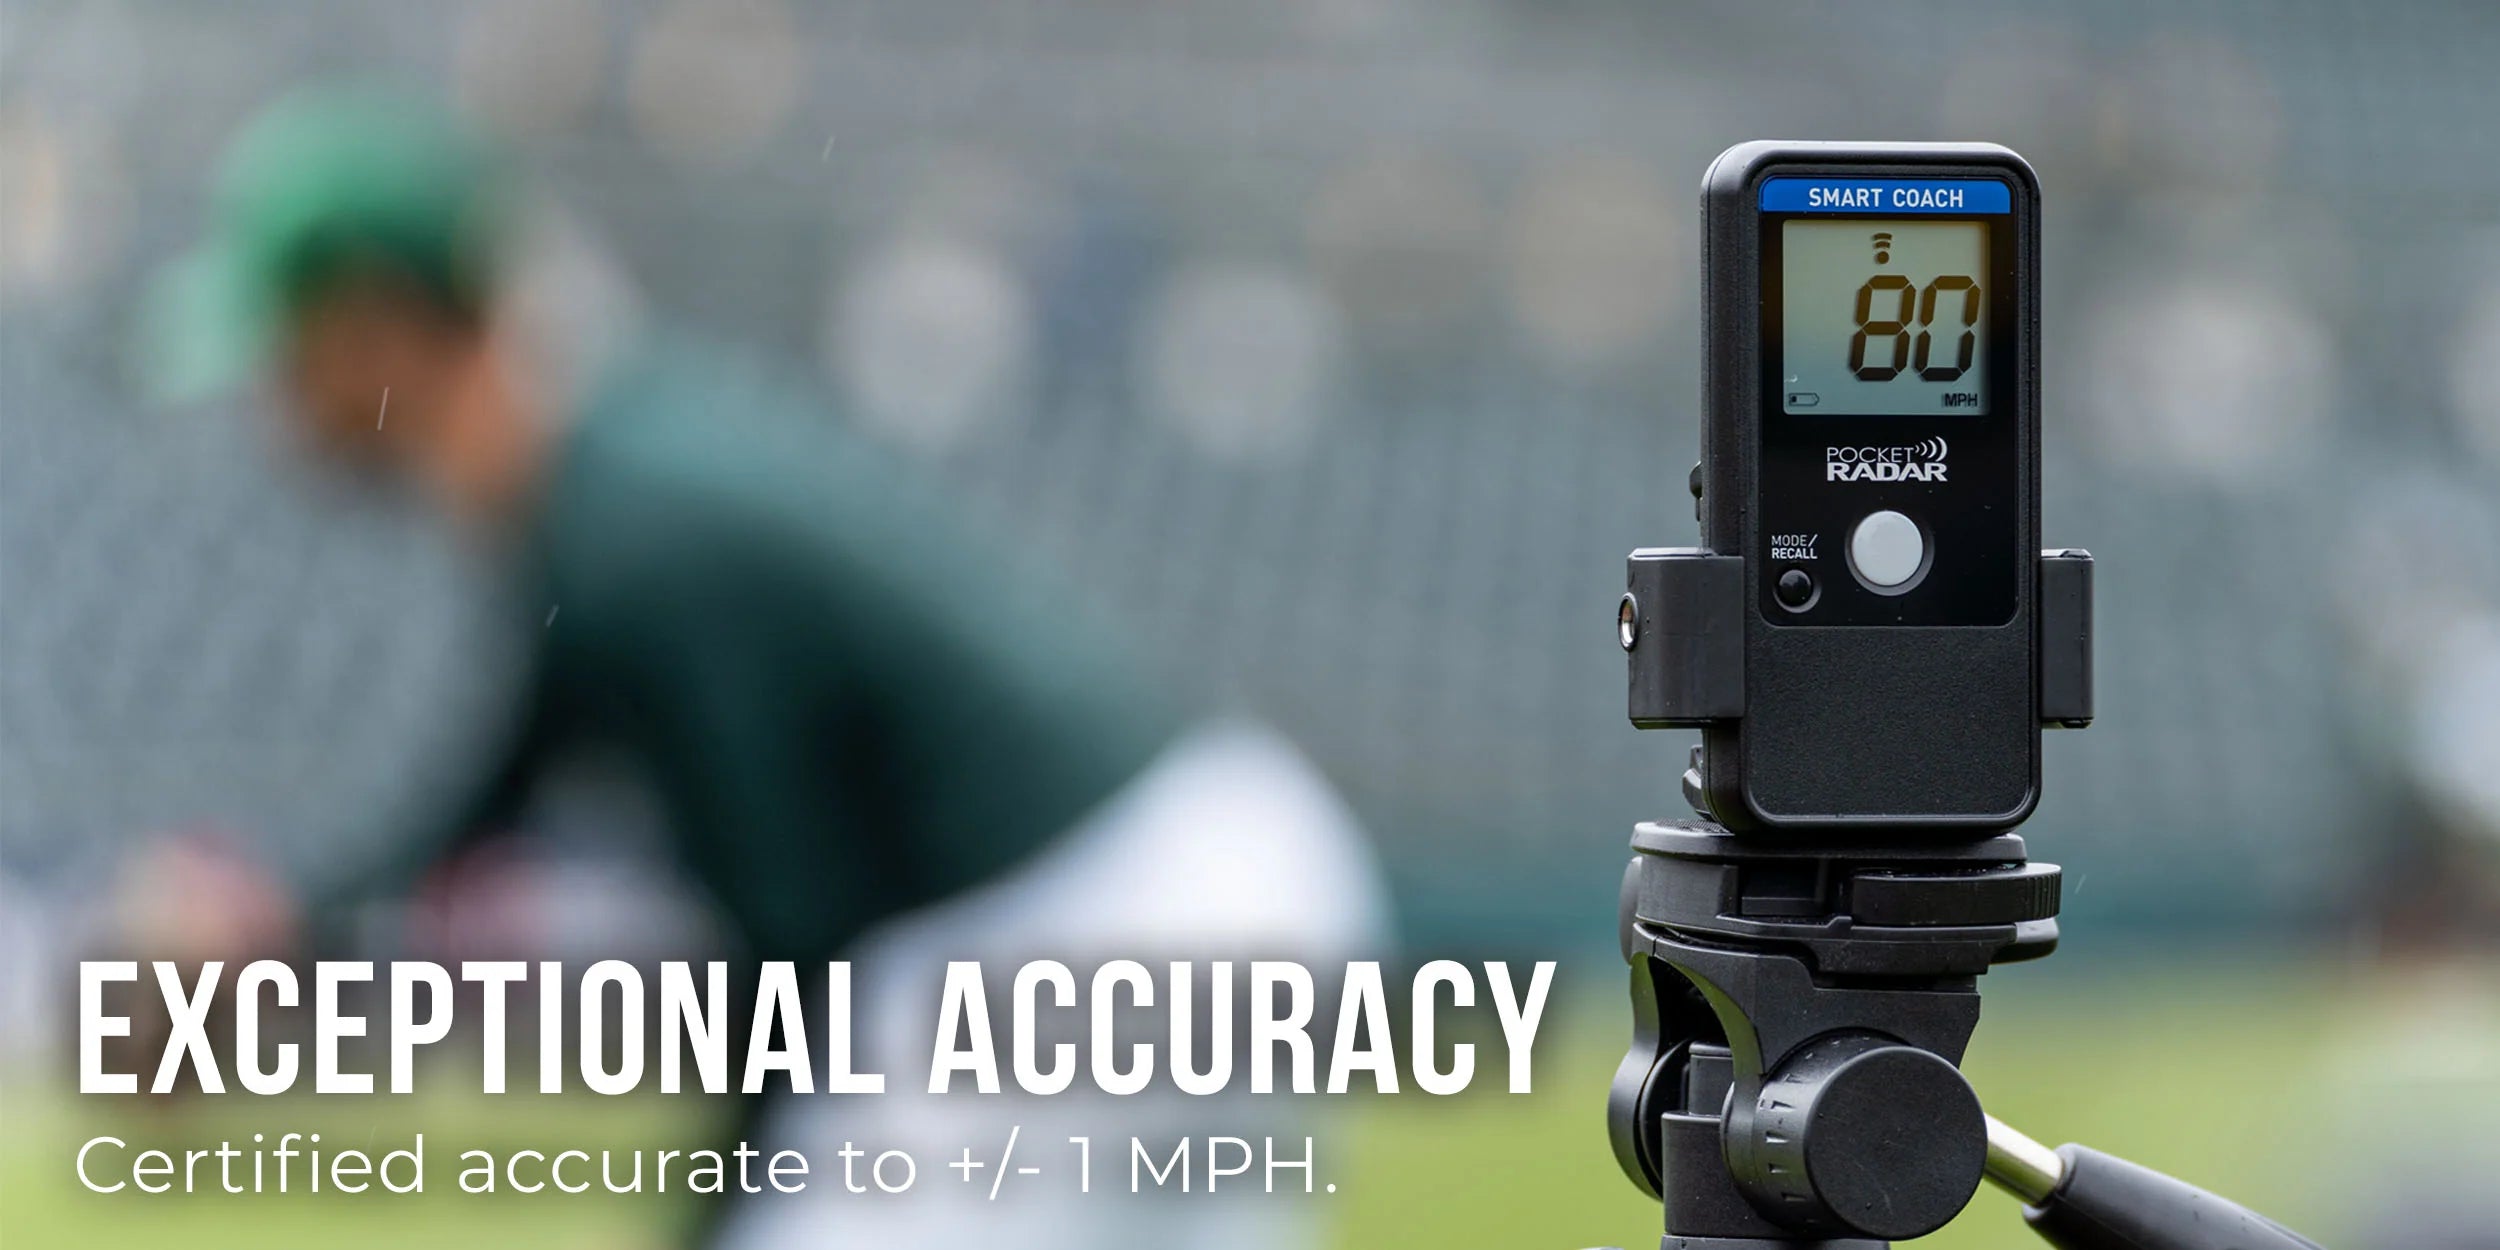 Baseball Radar Gun - Smart Coach-Pocket Radar - Pitch Machine Pros